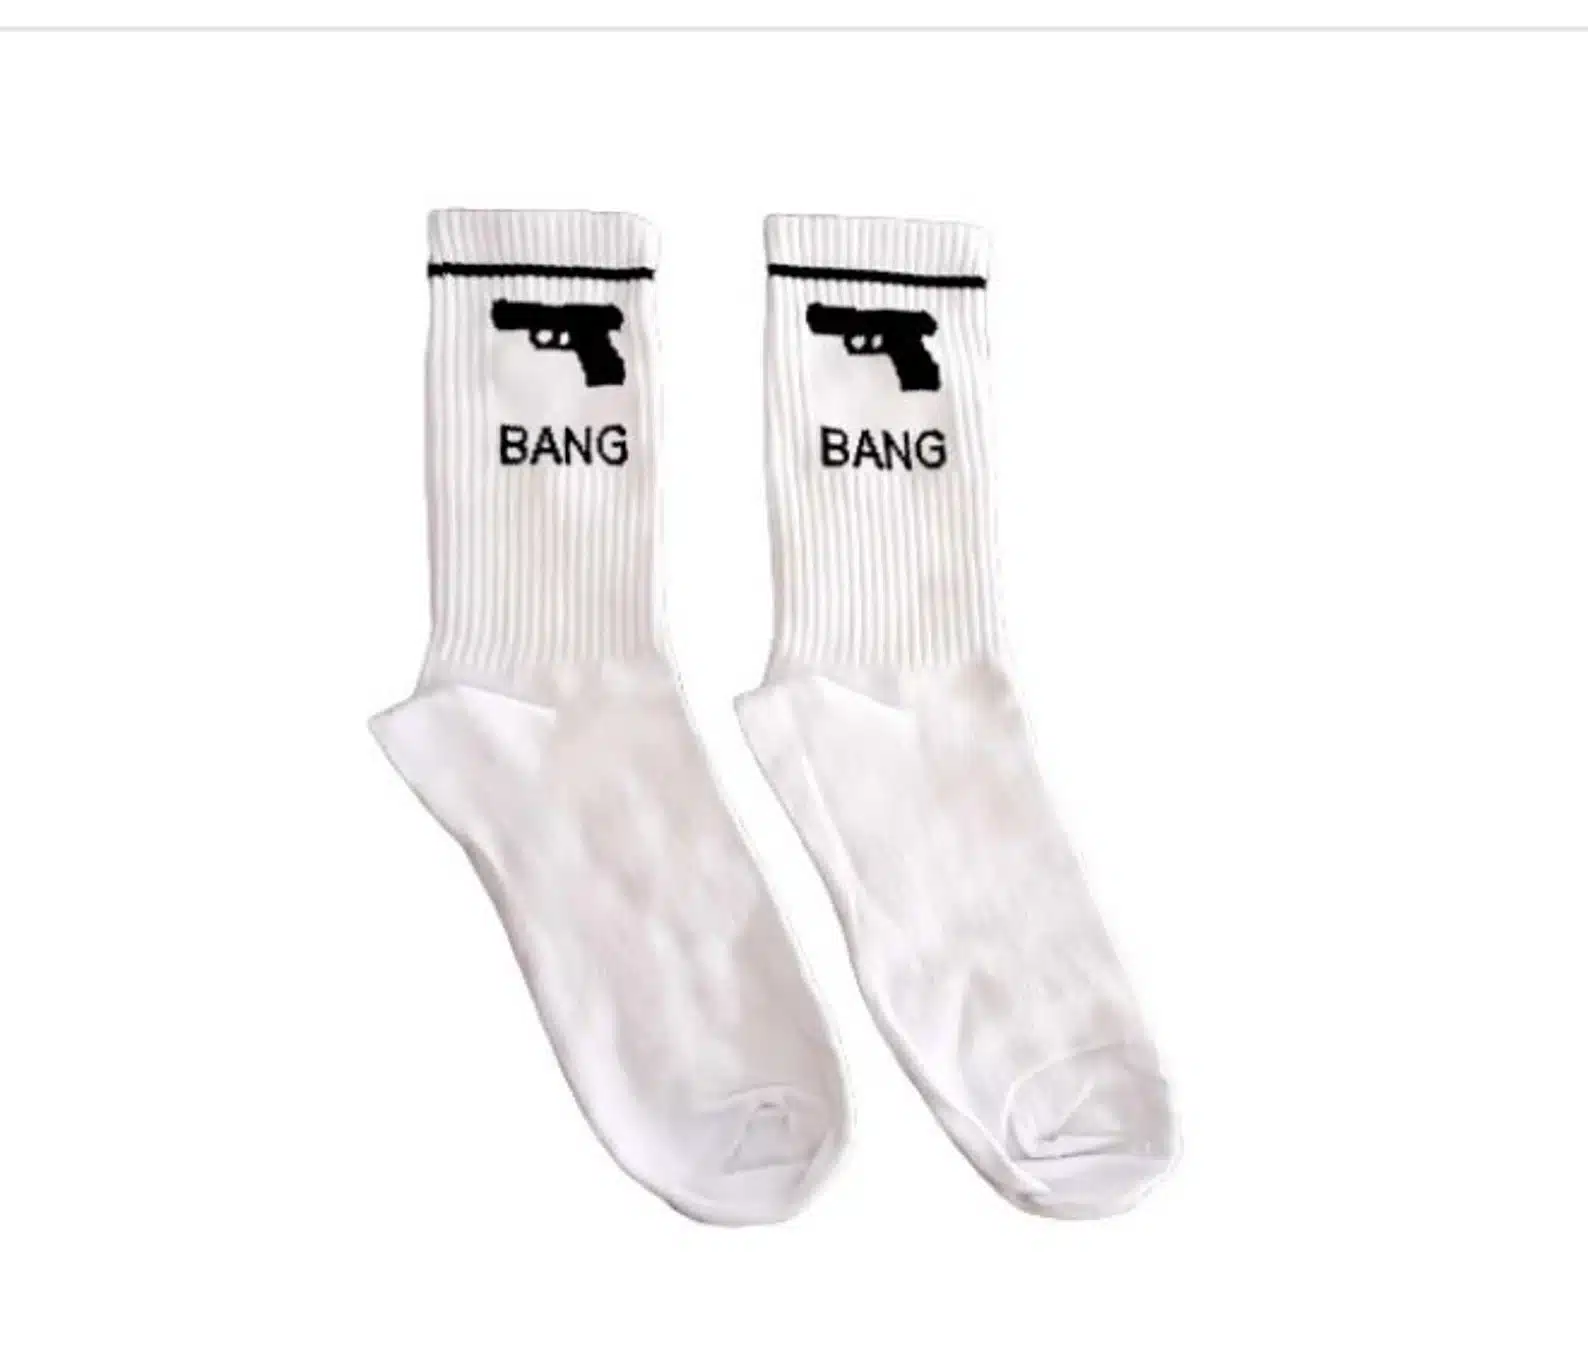 Bang Pistol Gun Man Socks